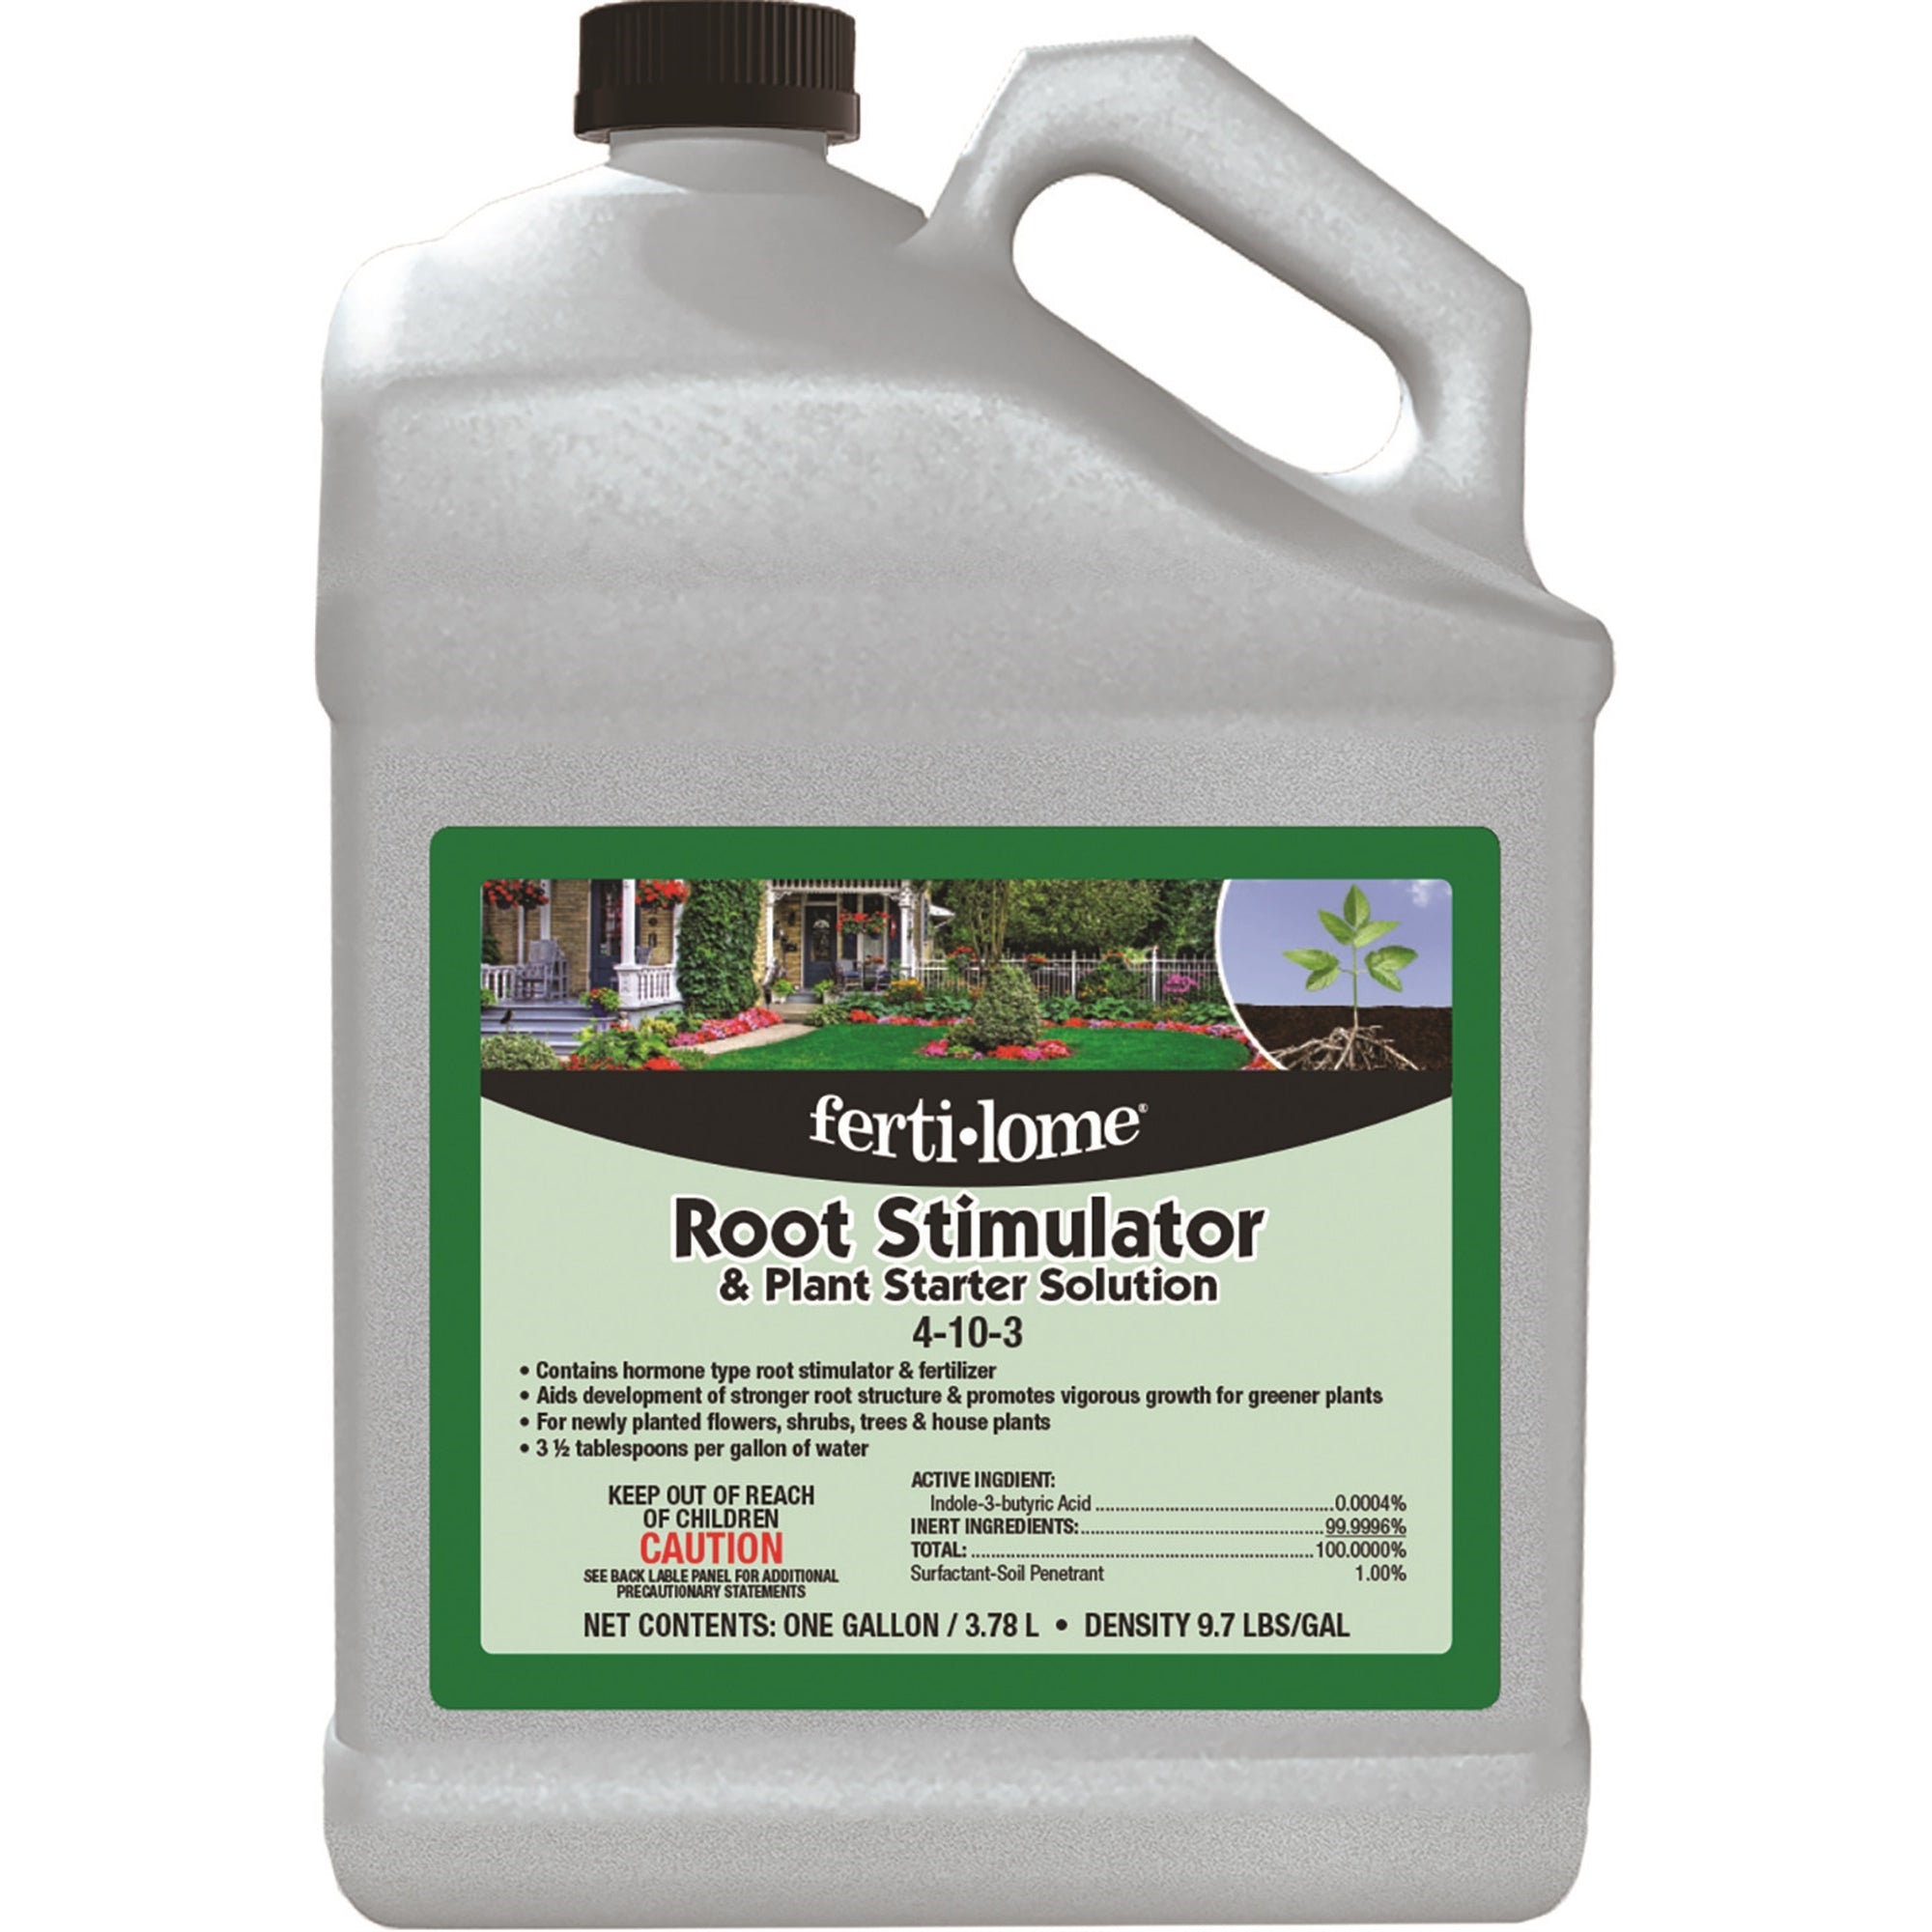 VPG Fertilome Root Stimulator and Plant Starter Solution, 4-10-3